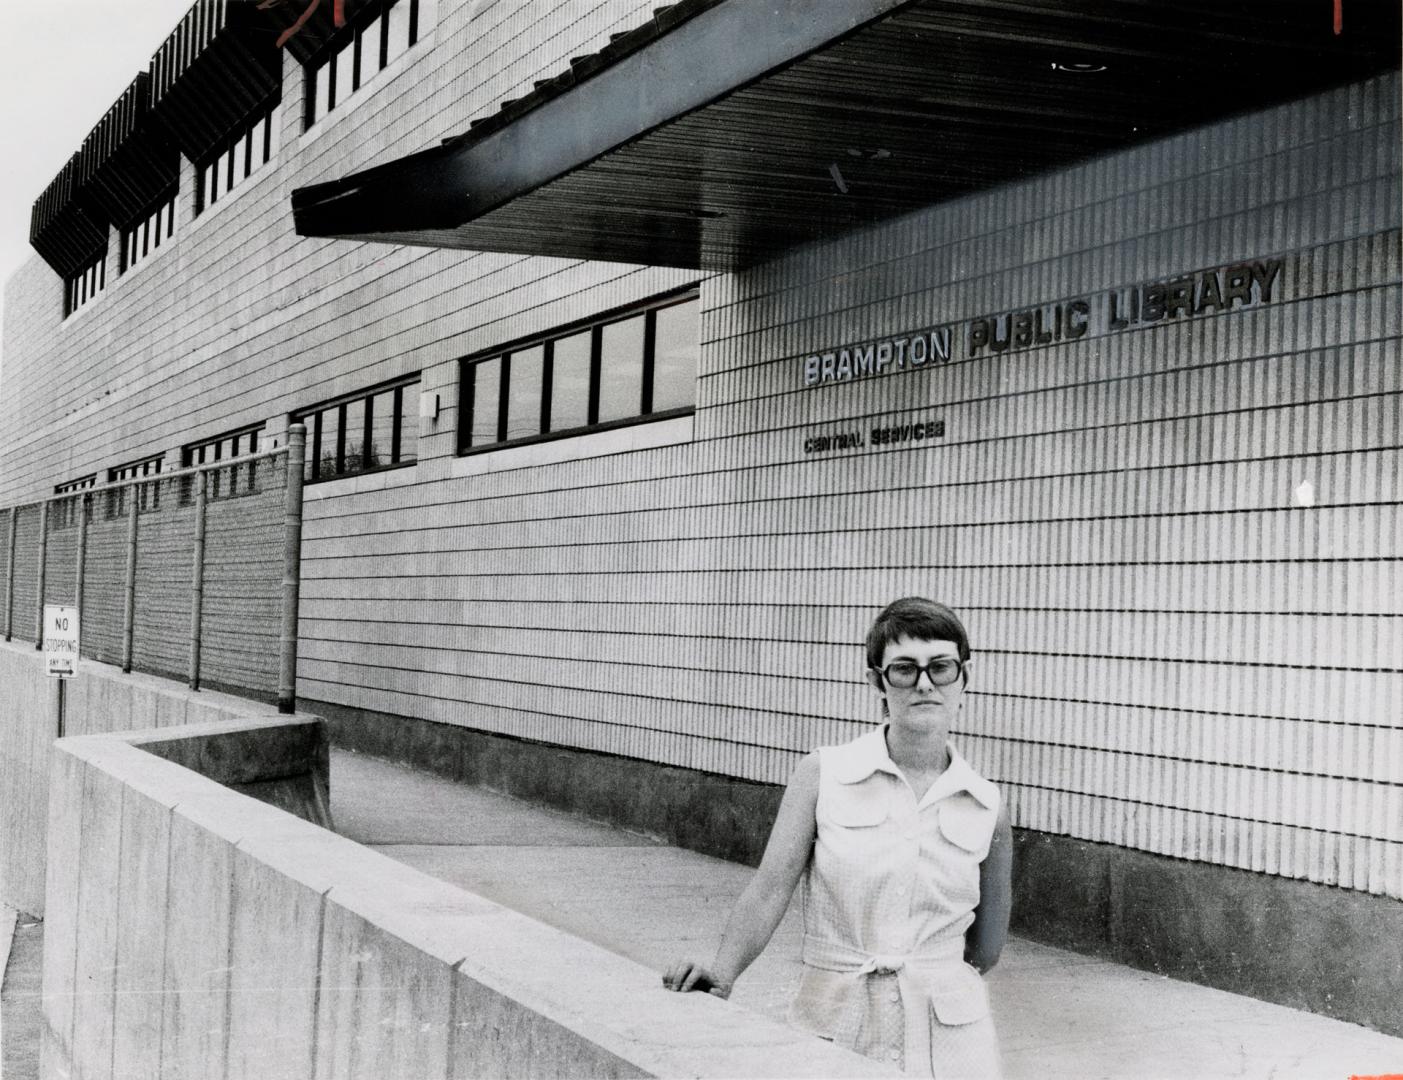 Library director Judith Ruan in front of Brampton Public Library, Central Services. Brampton, Ontario